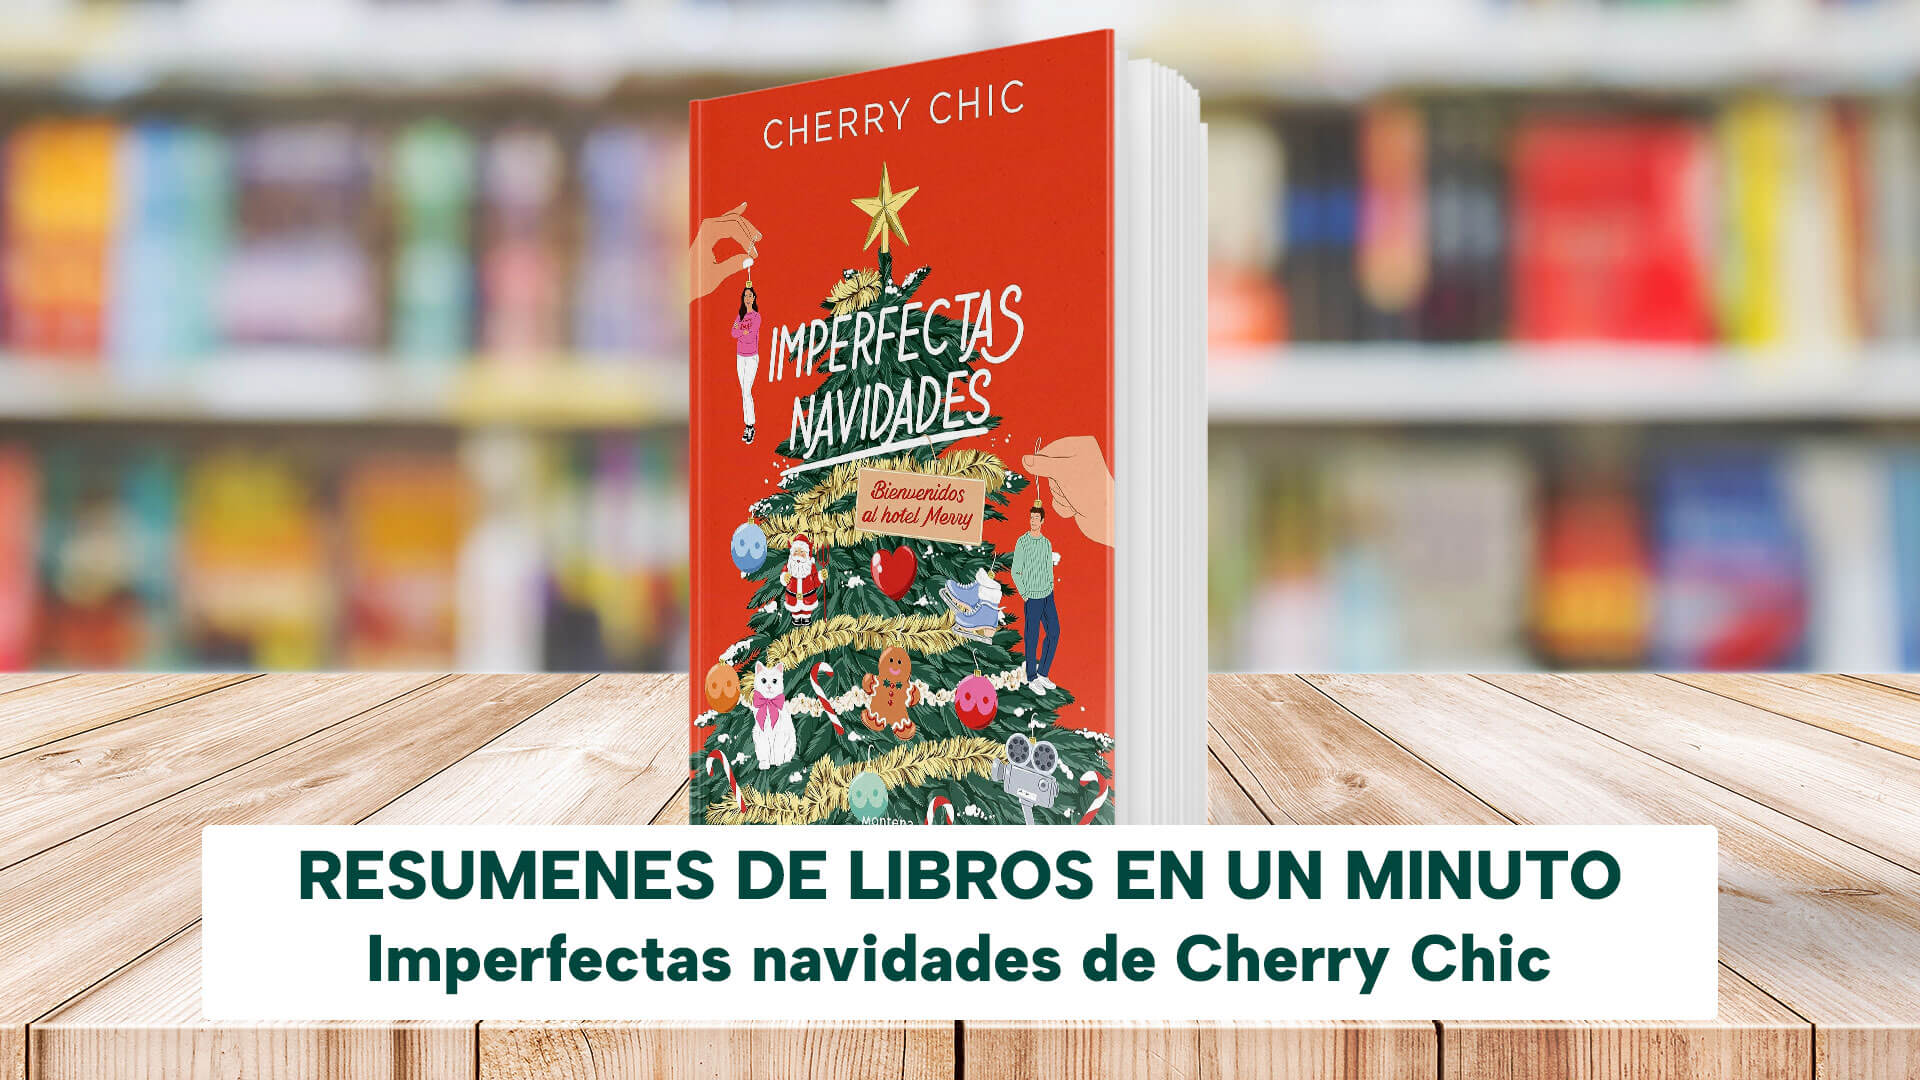 Imperfectas navidades - Cherry Chic: ¿Rivalidad o romance?